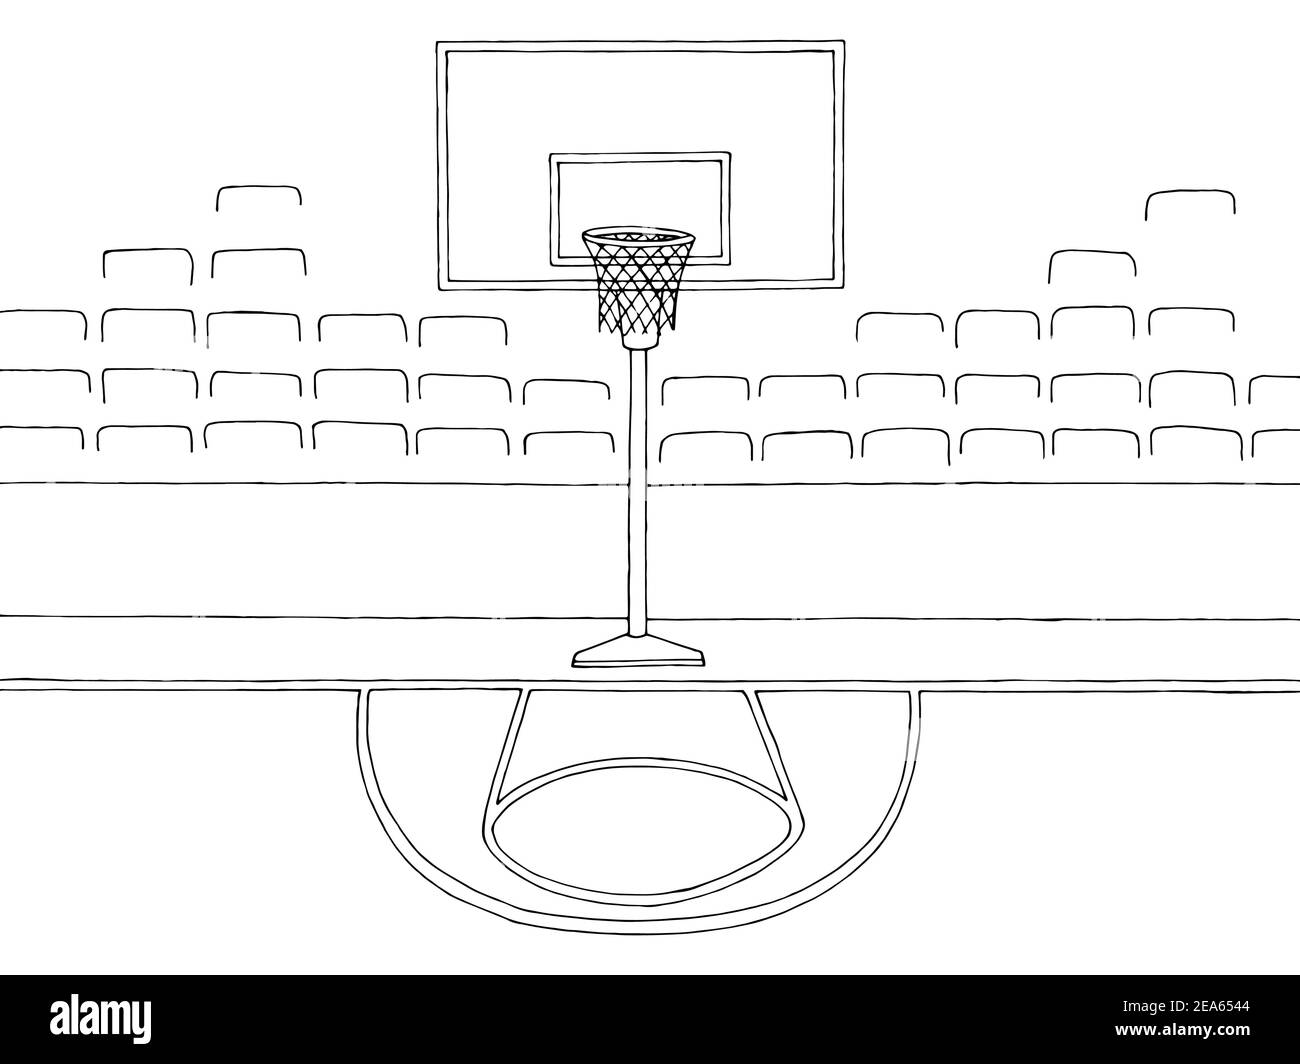 Basketball Stadion Court Interieur Sport Grafik schwarz weiß Skizze Illustration vektor Stock Vektor